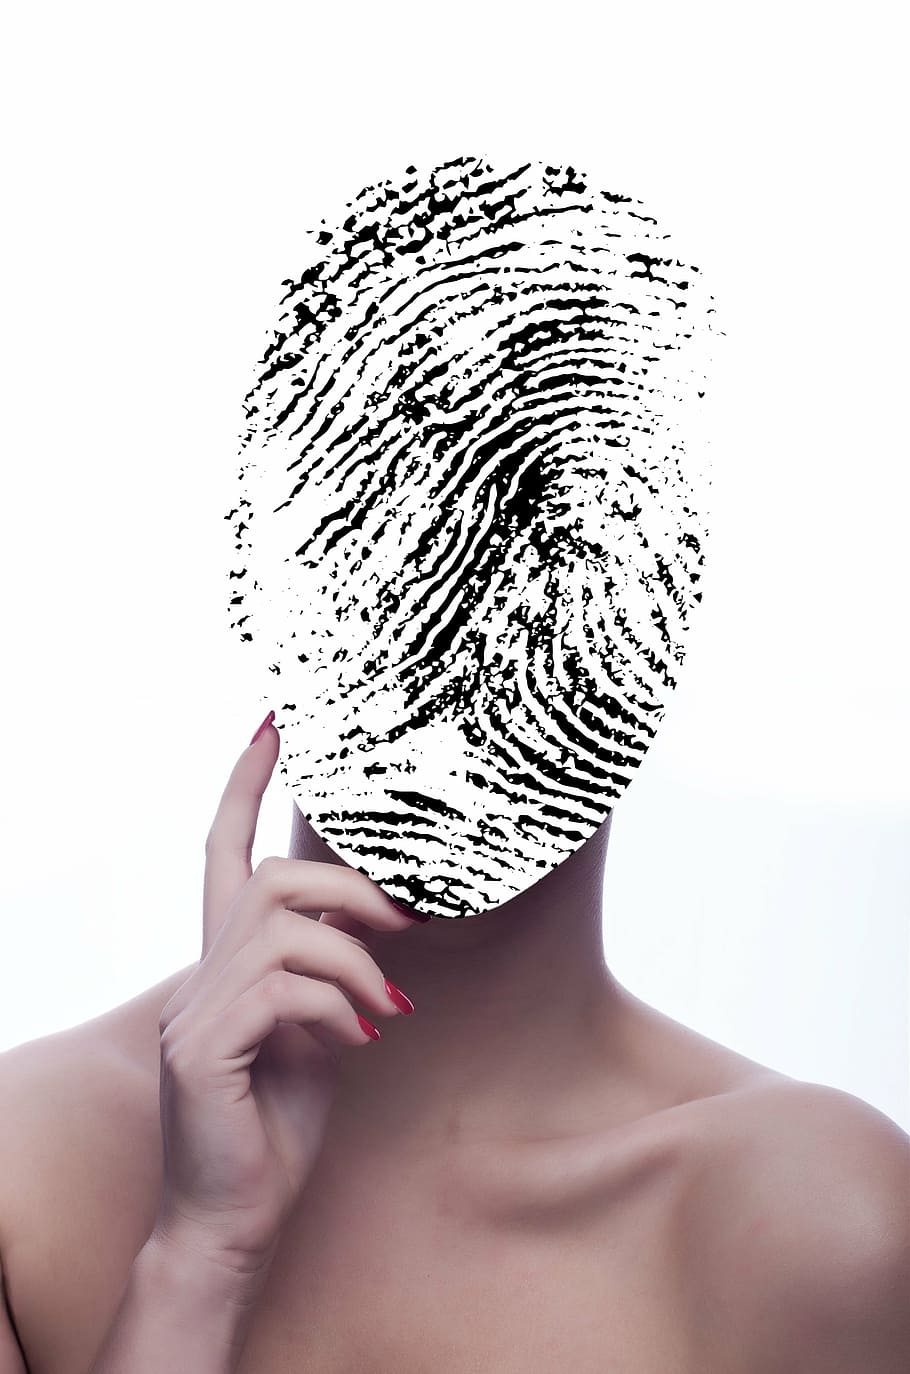 black, white, finger print, person, face, fingerprint, personalization, data retention, flexibility, data security